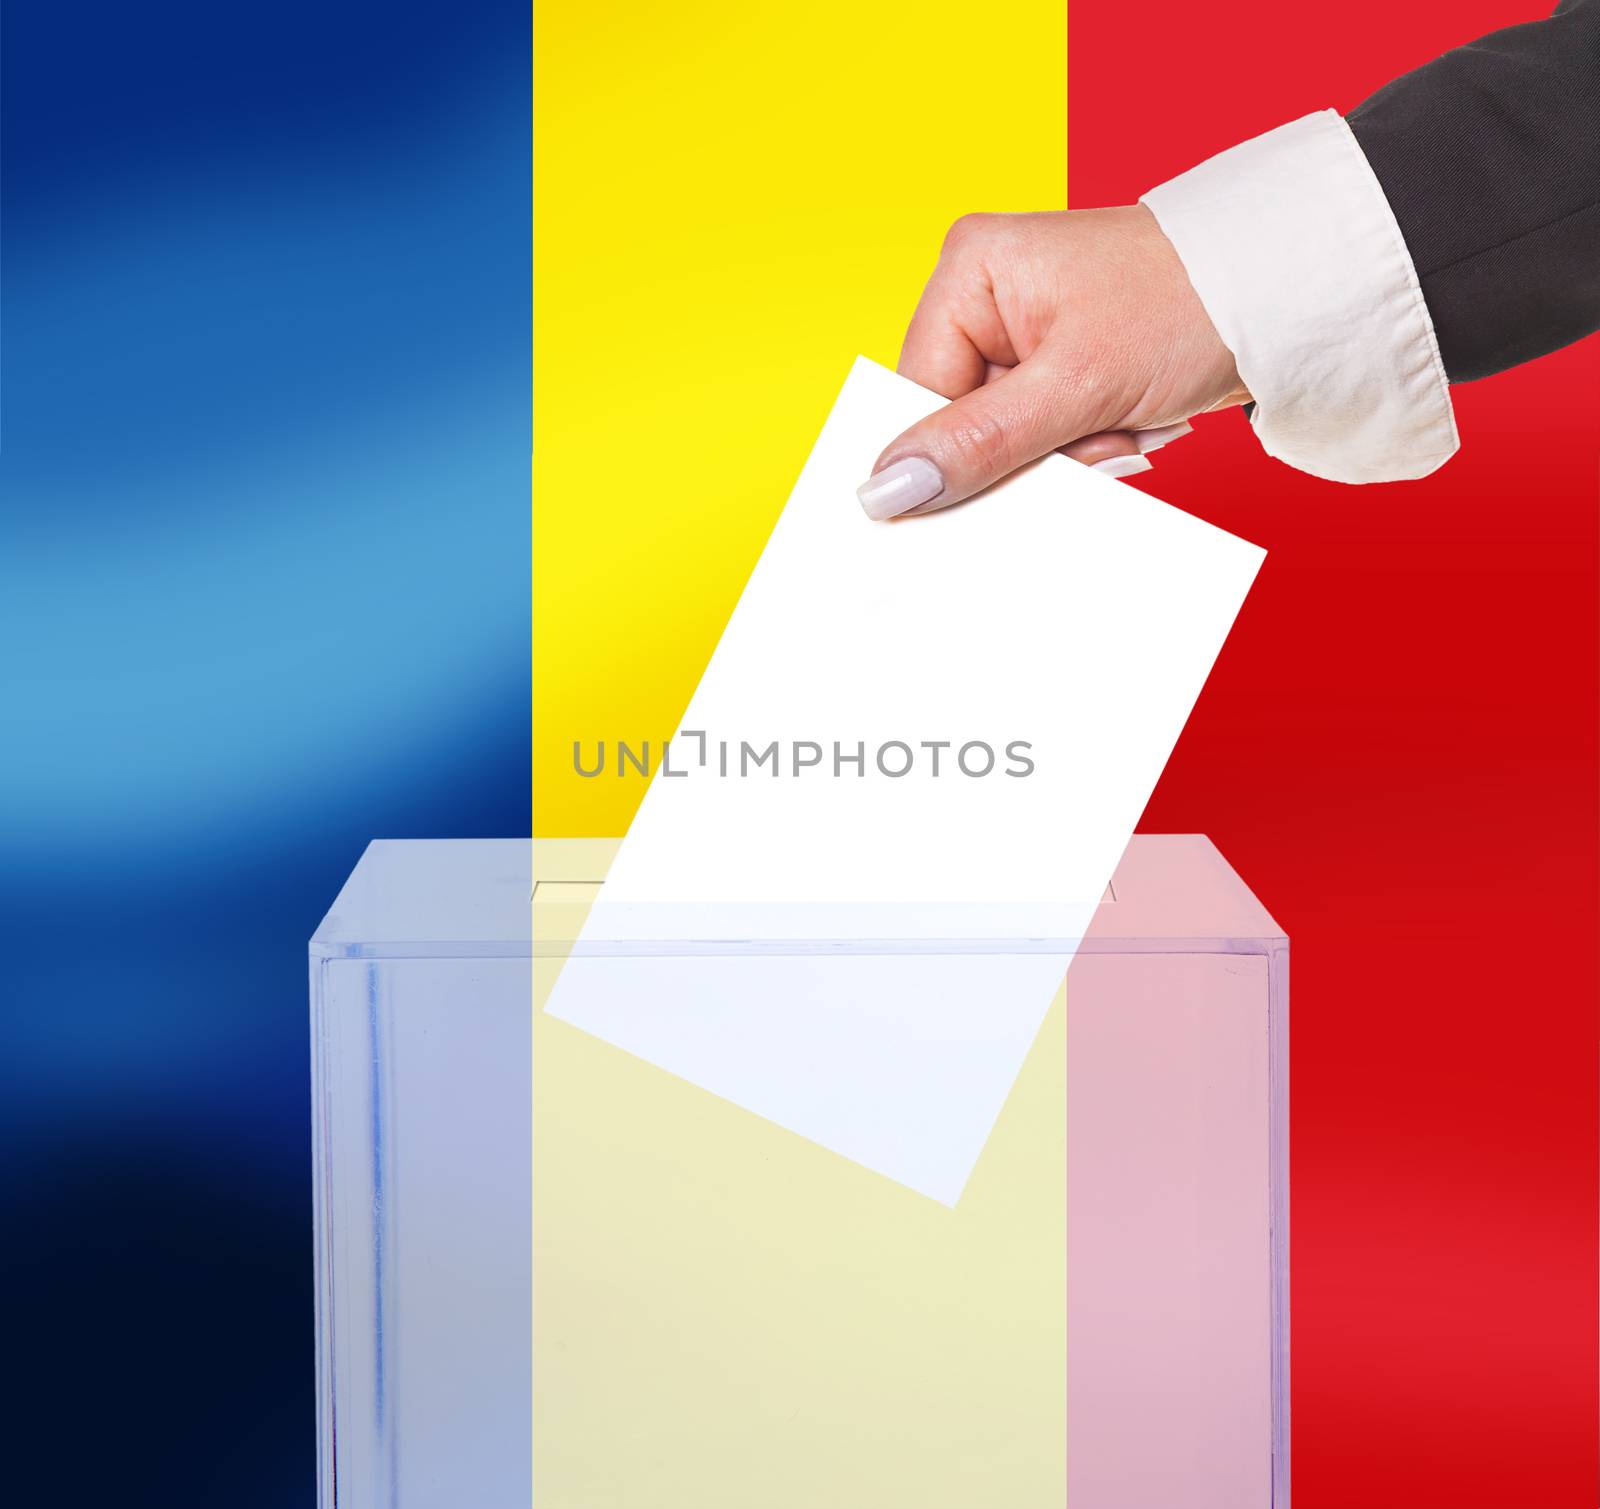 electoral vote by ballot, under the Romania flag